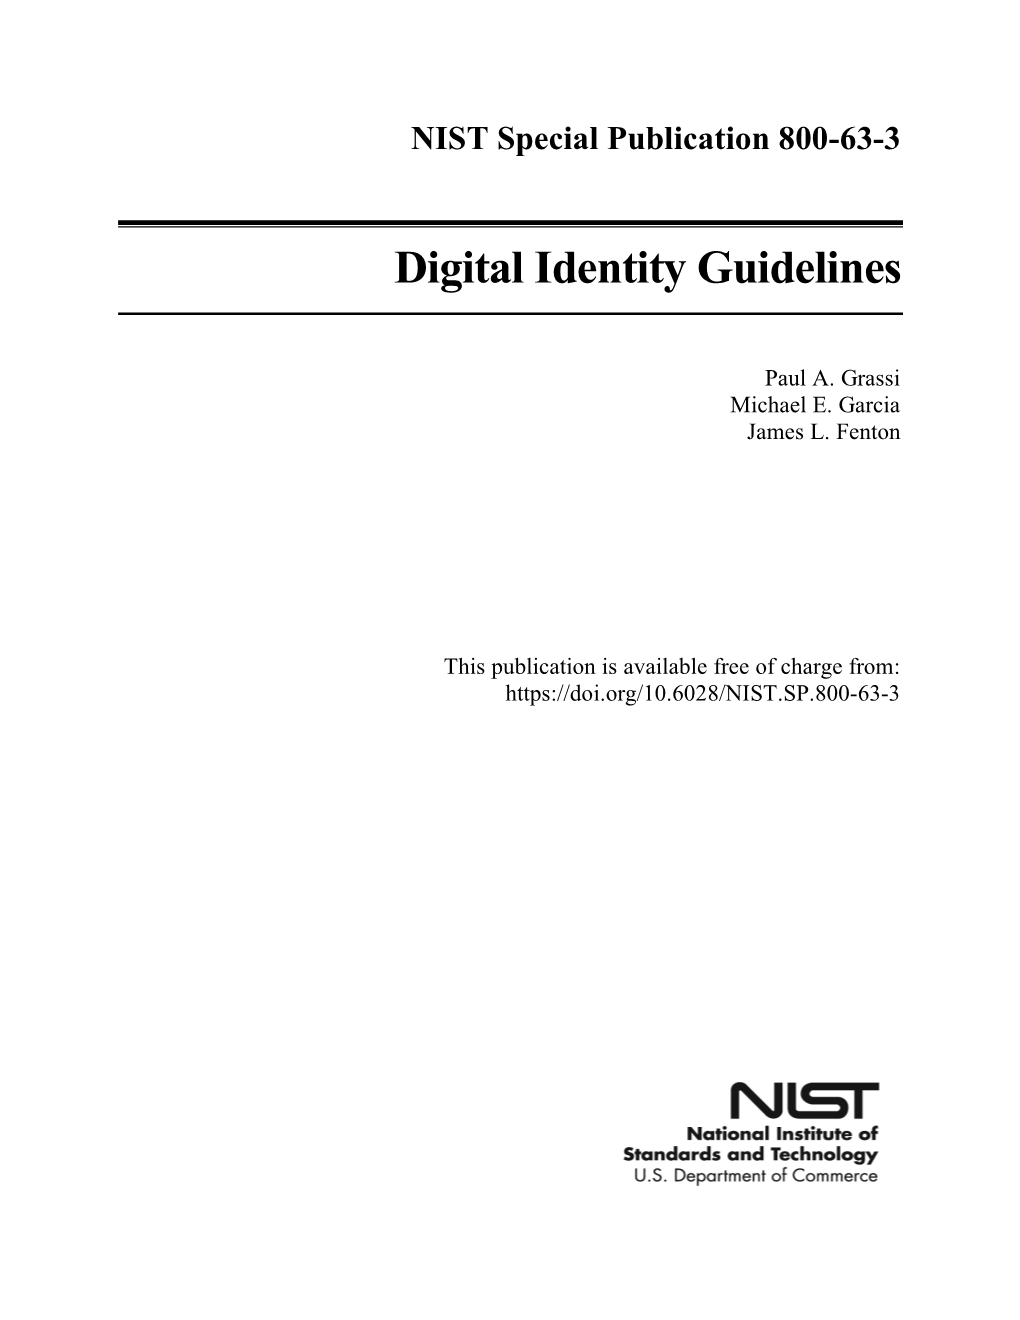 Digital Identity Guidelines